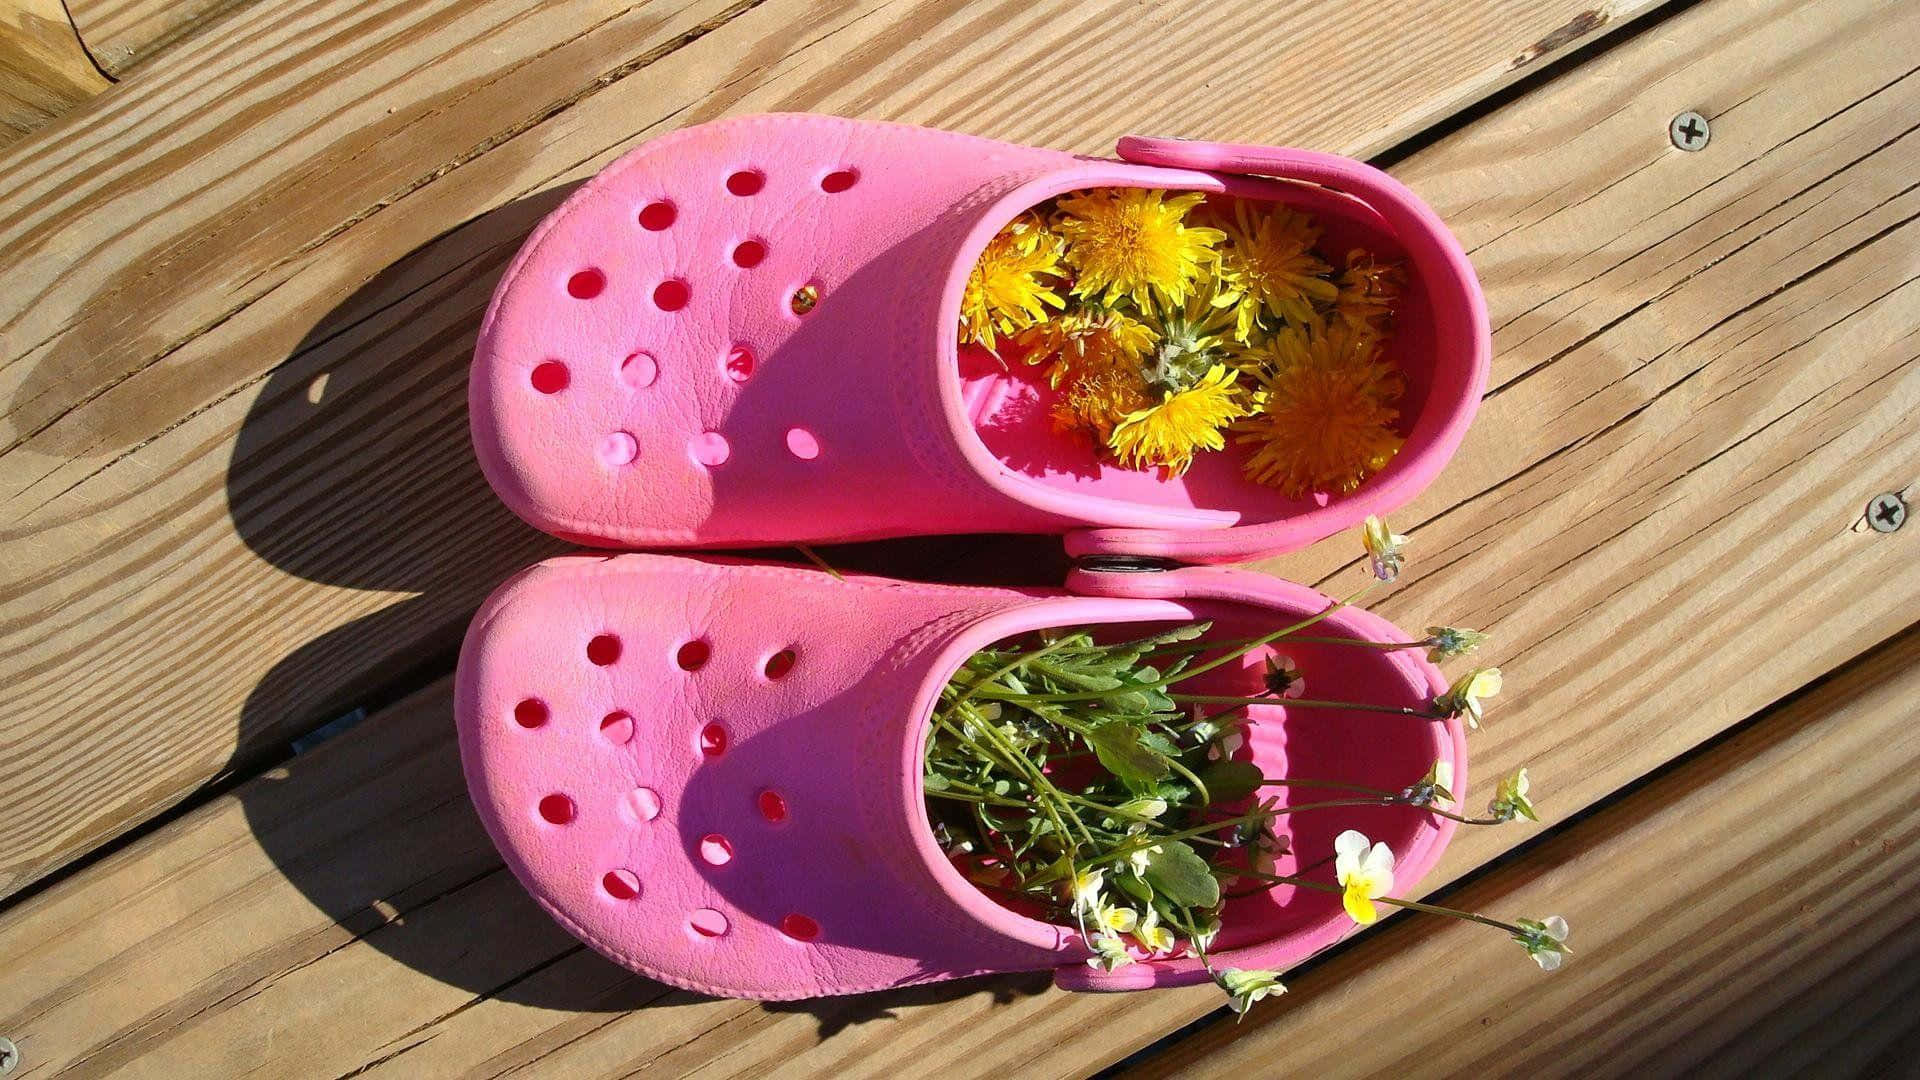 Style and Comfort Meet in Crocs Footwear